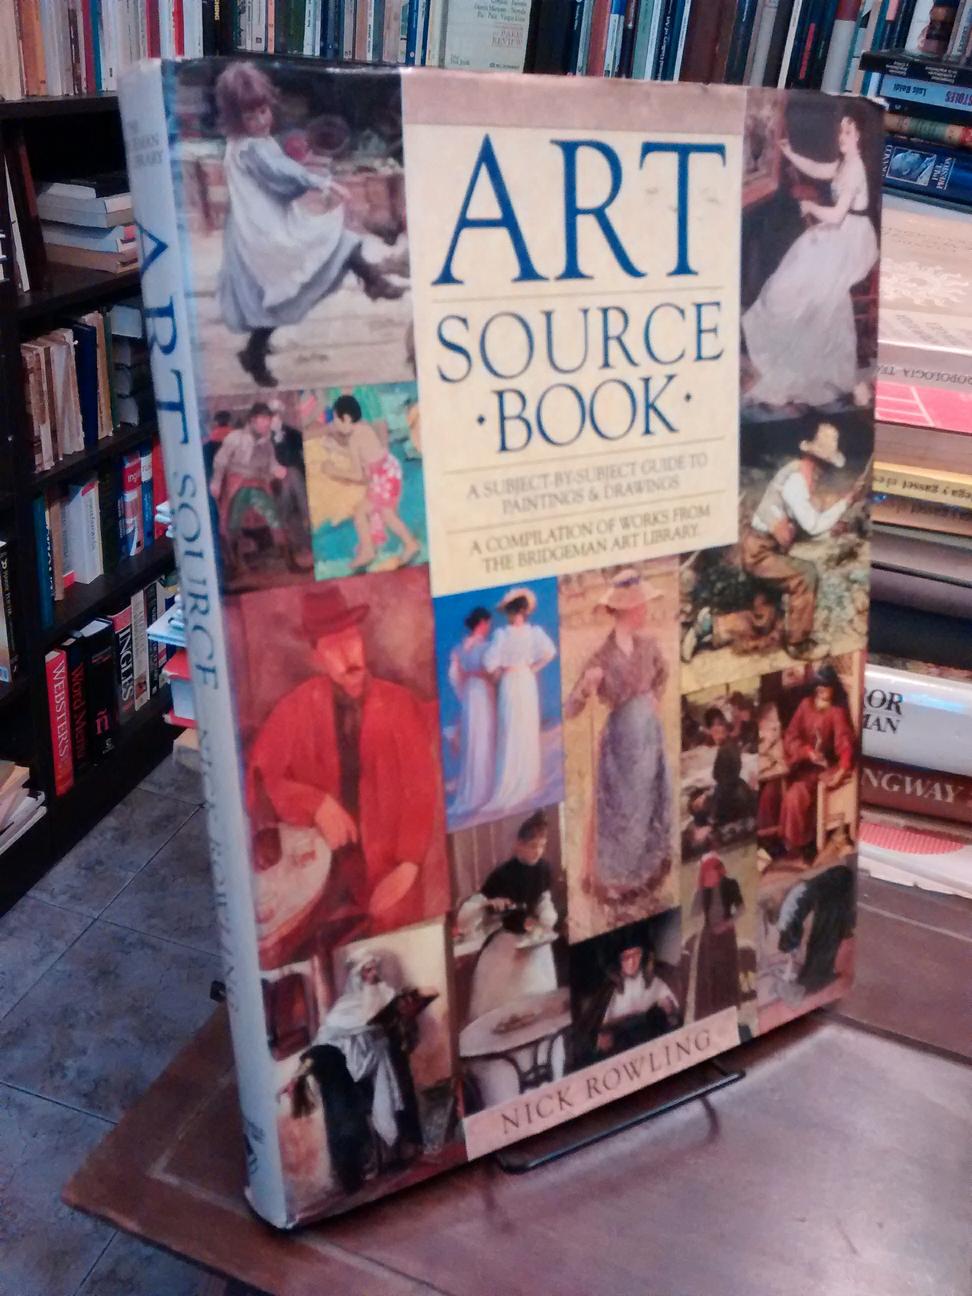 Art Source Book - Nick Rowling